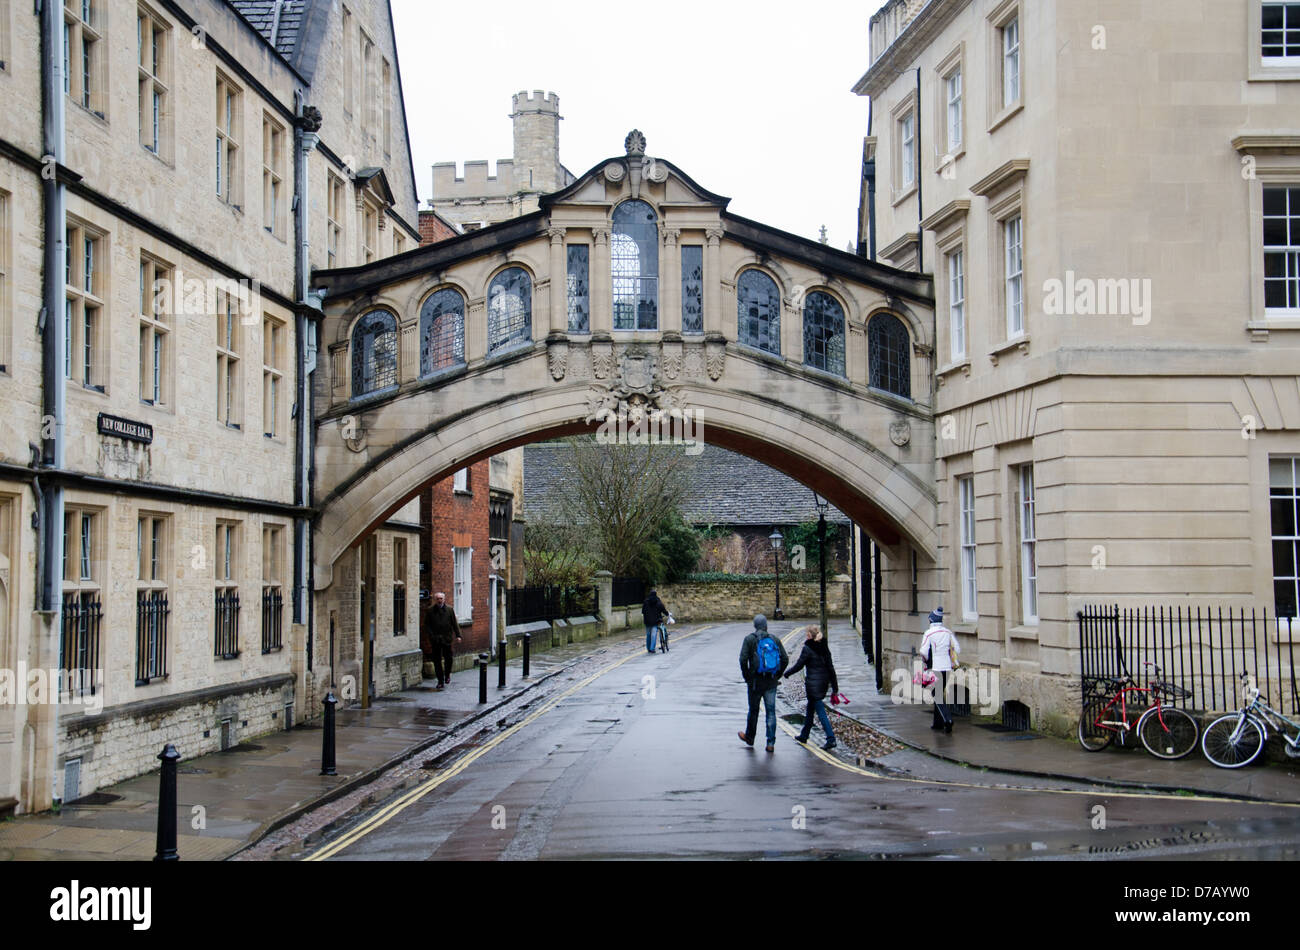 Bridge of sigh - Oxford Stock Photo